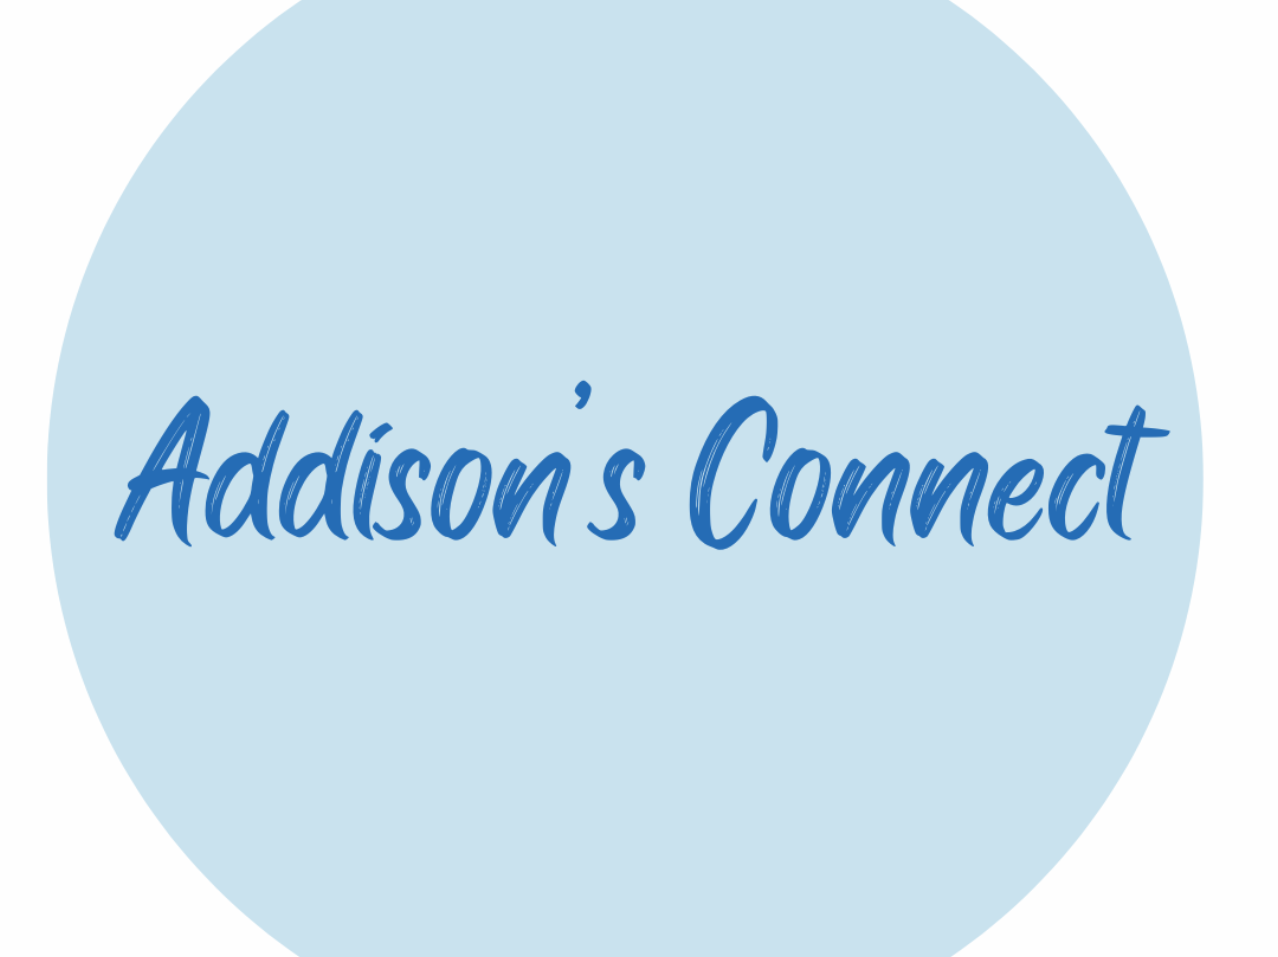 Addison's Connect